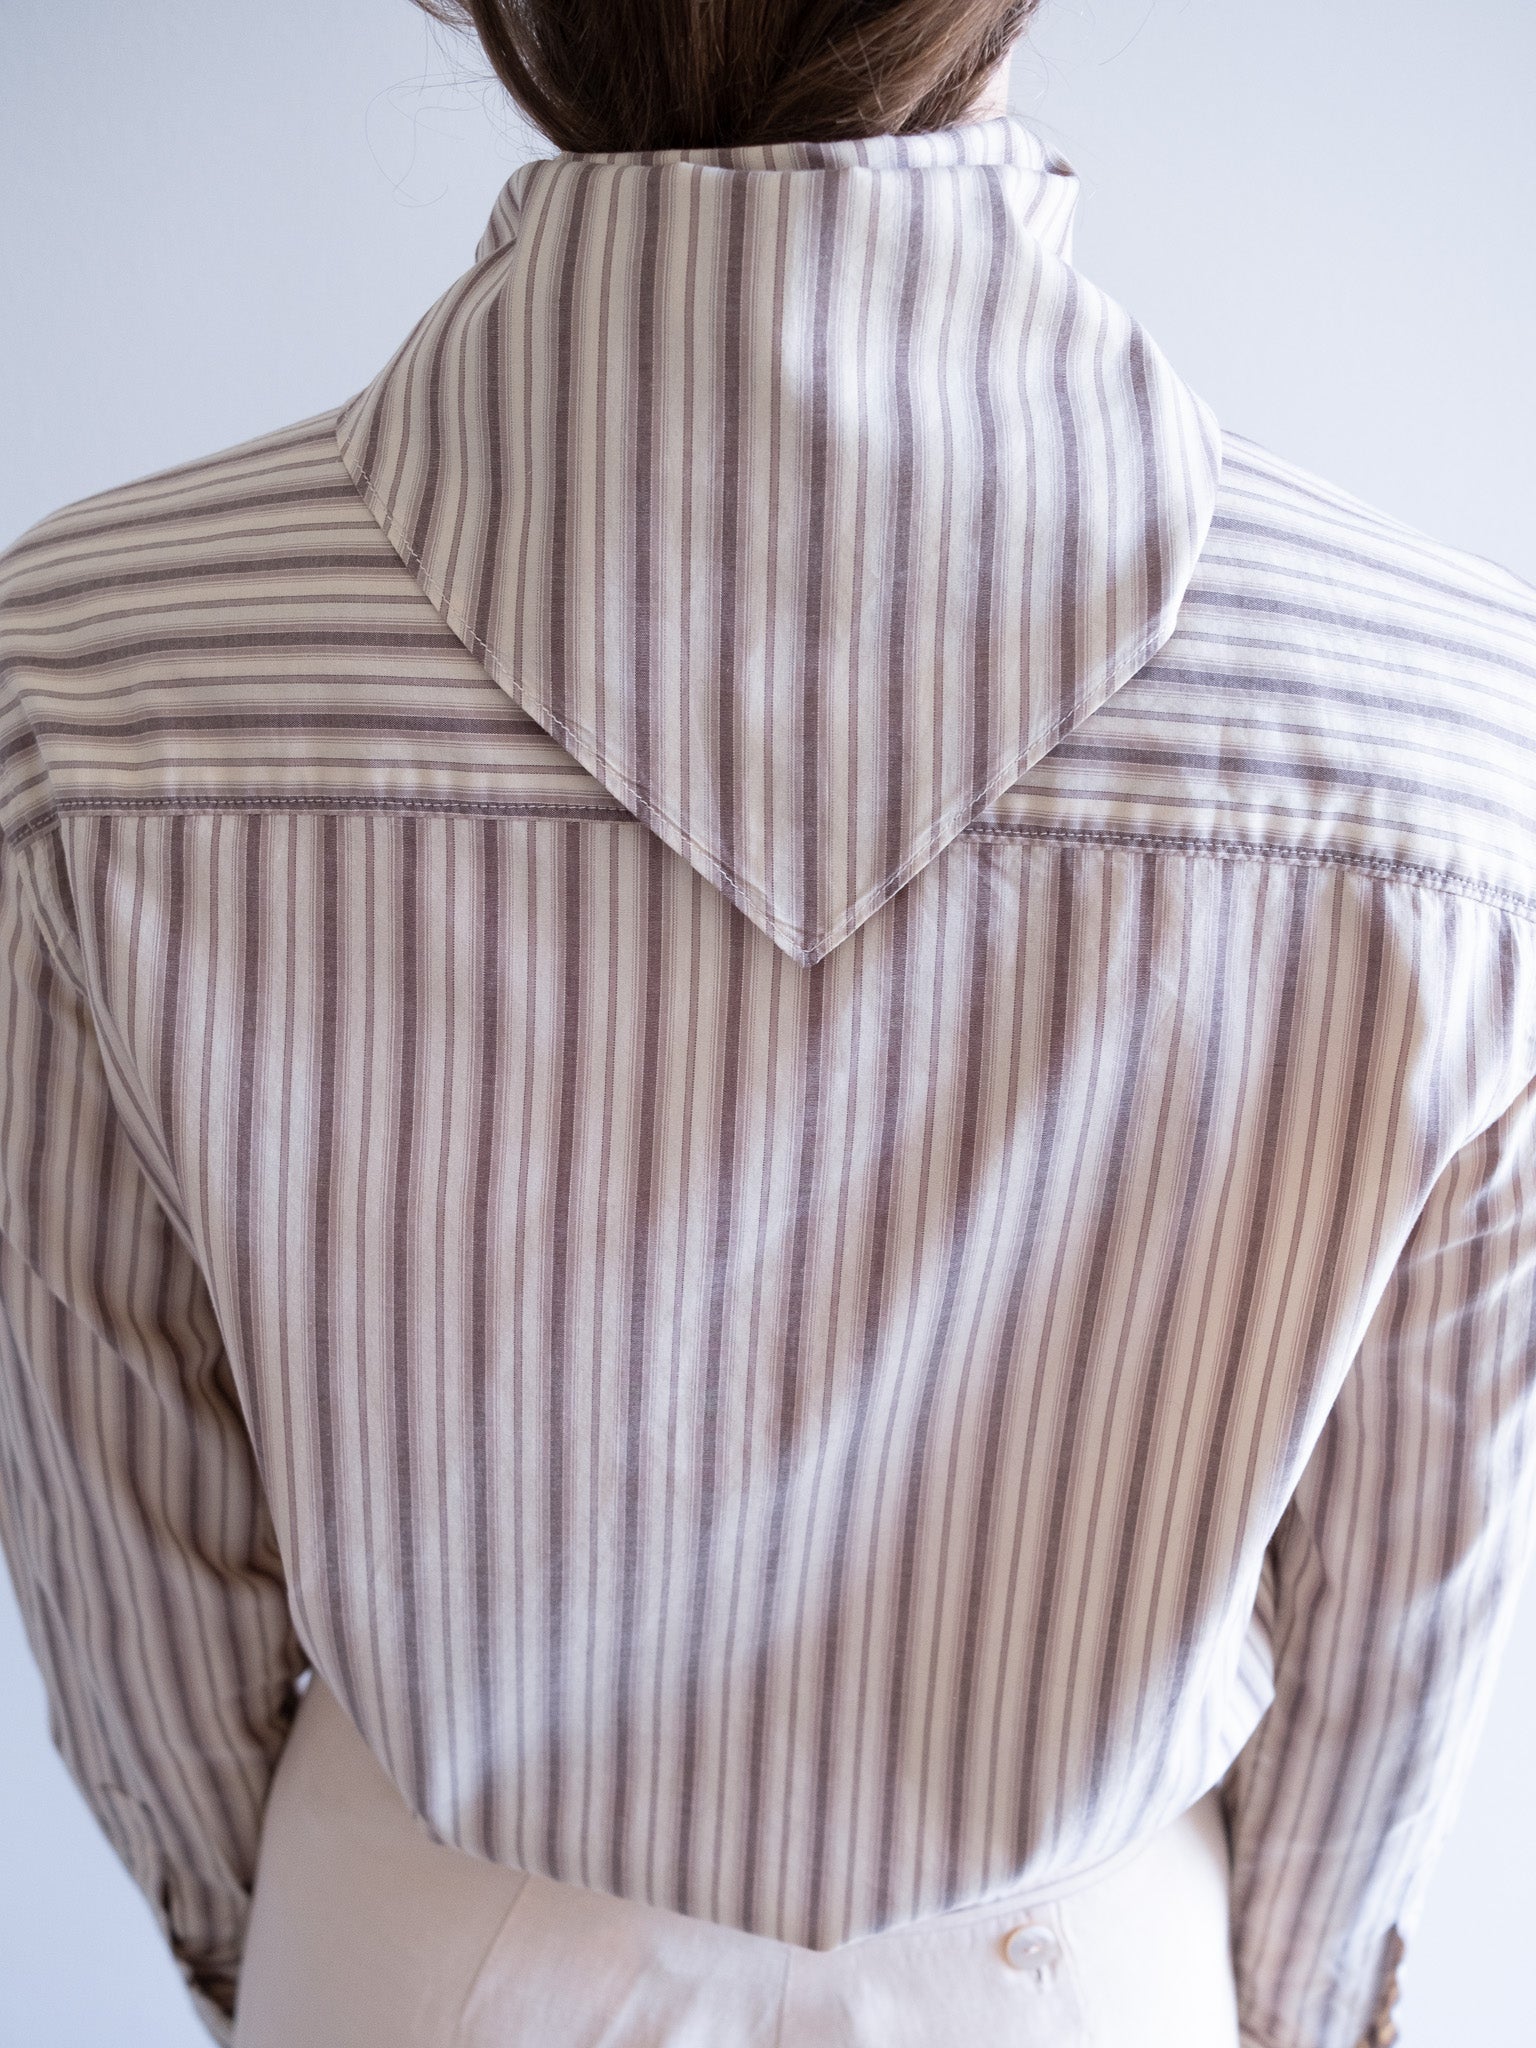 Roméo Gigli striped shirt